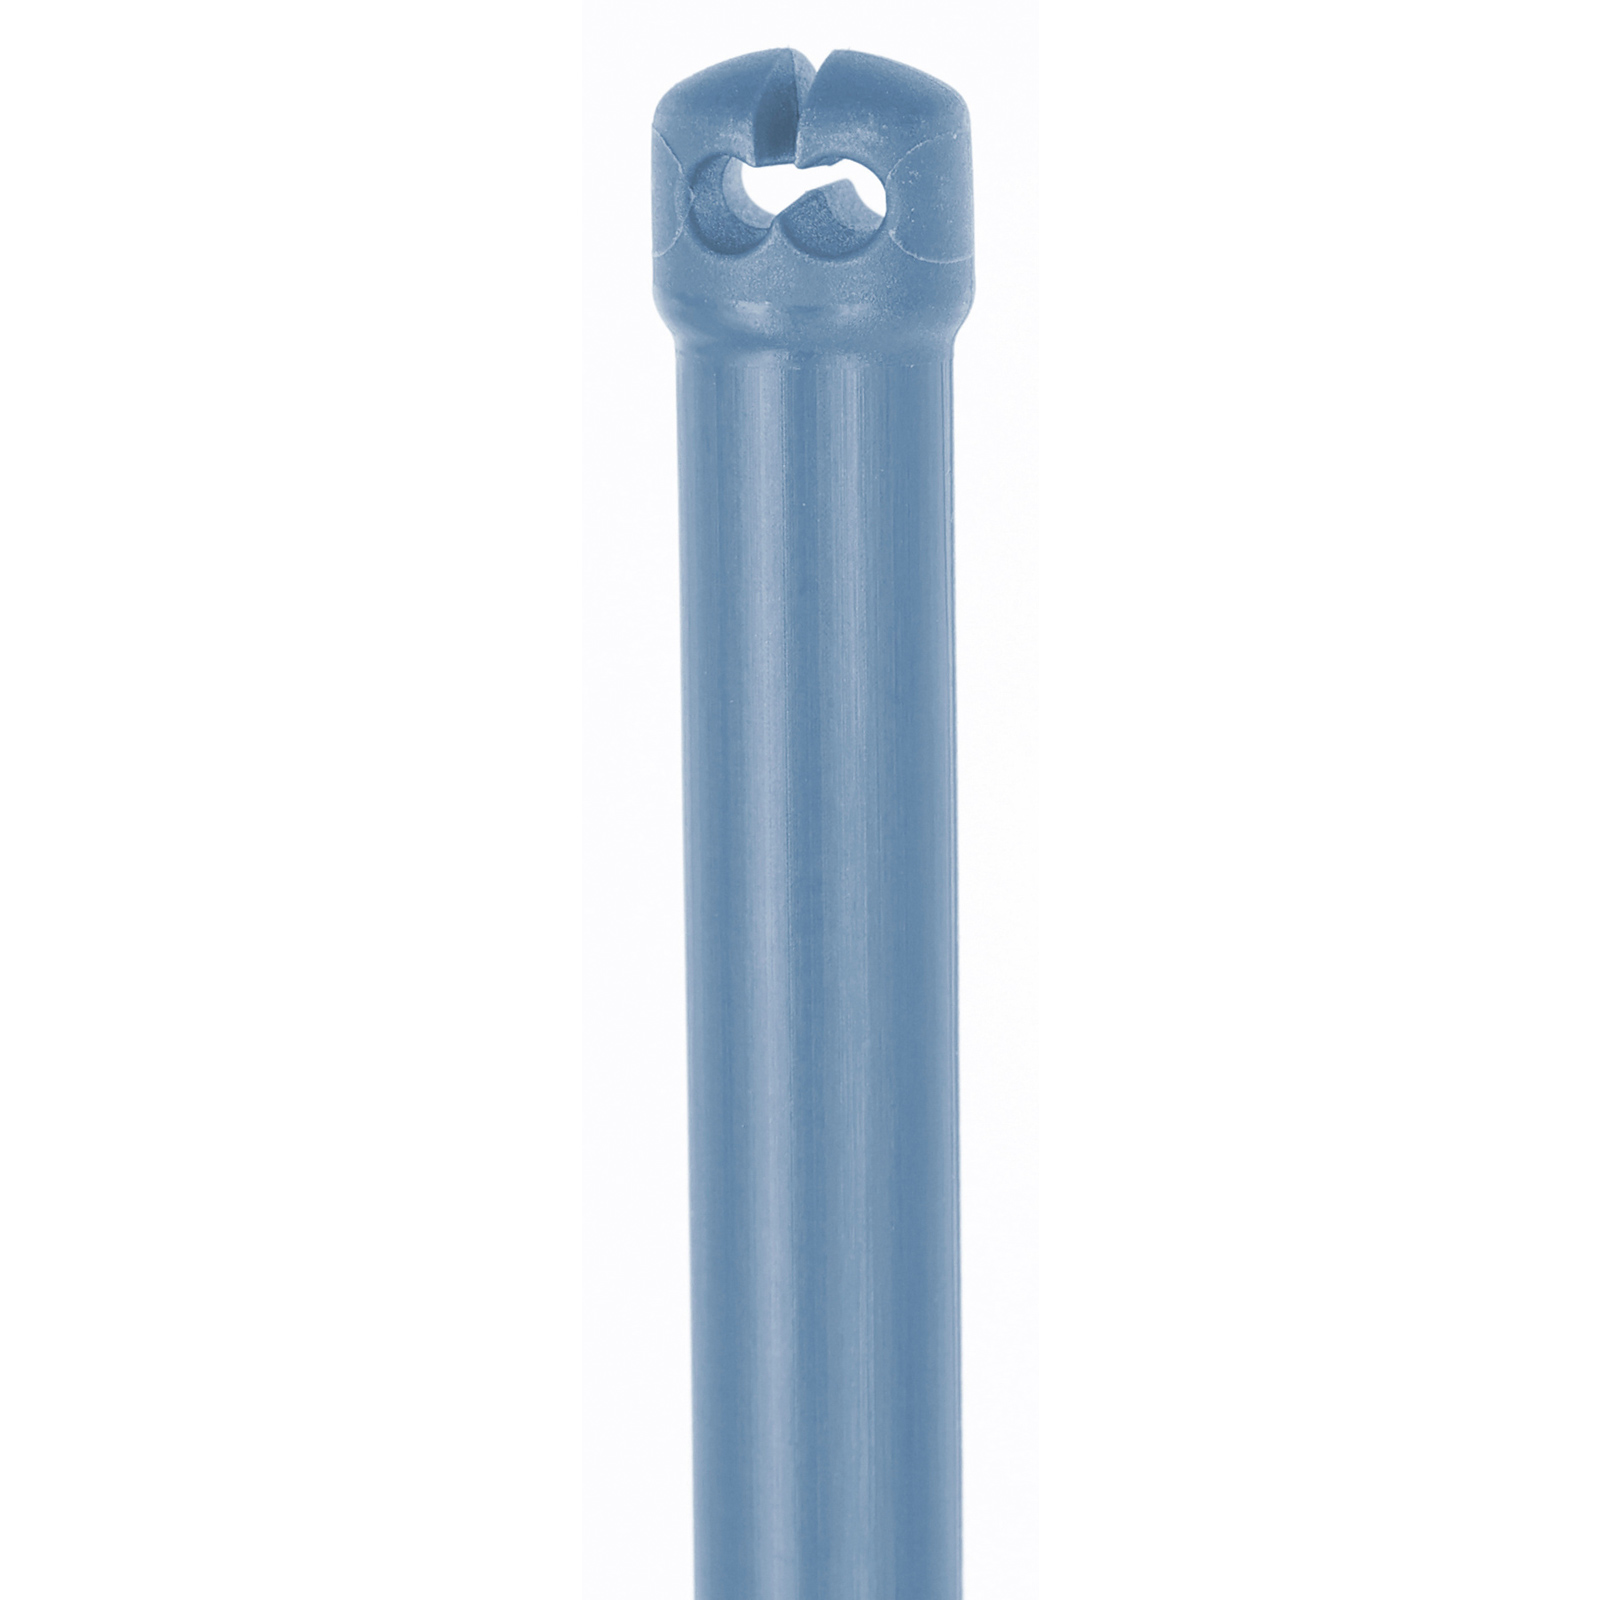 Premium Thermoplastic Fibreglass post for pasture net, double tip, blue